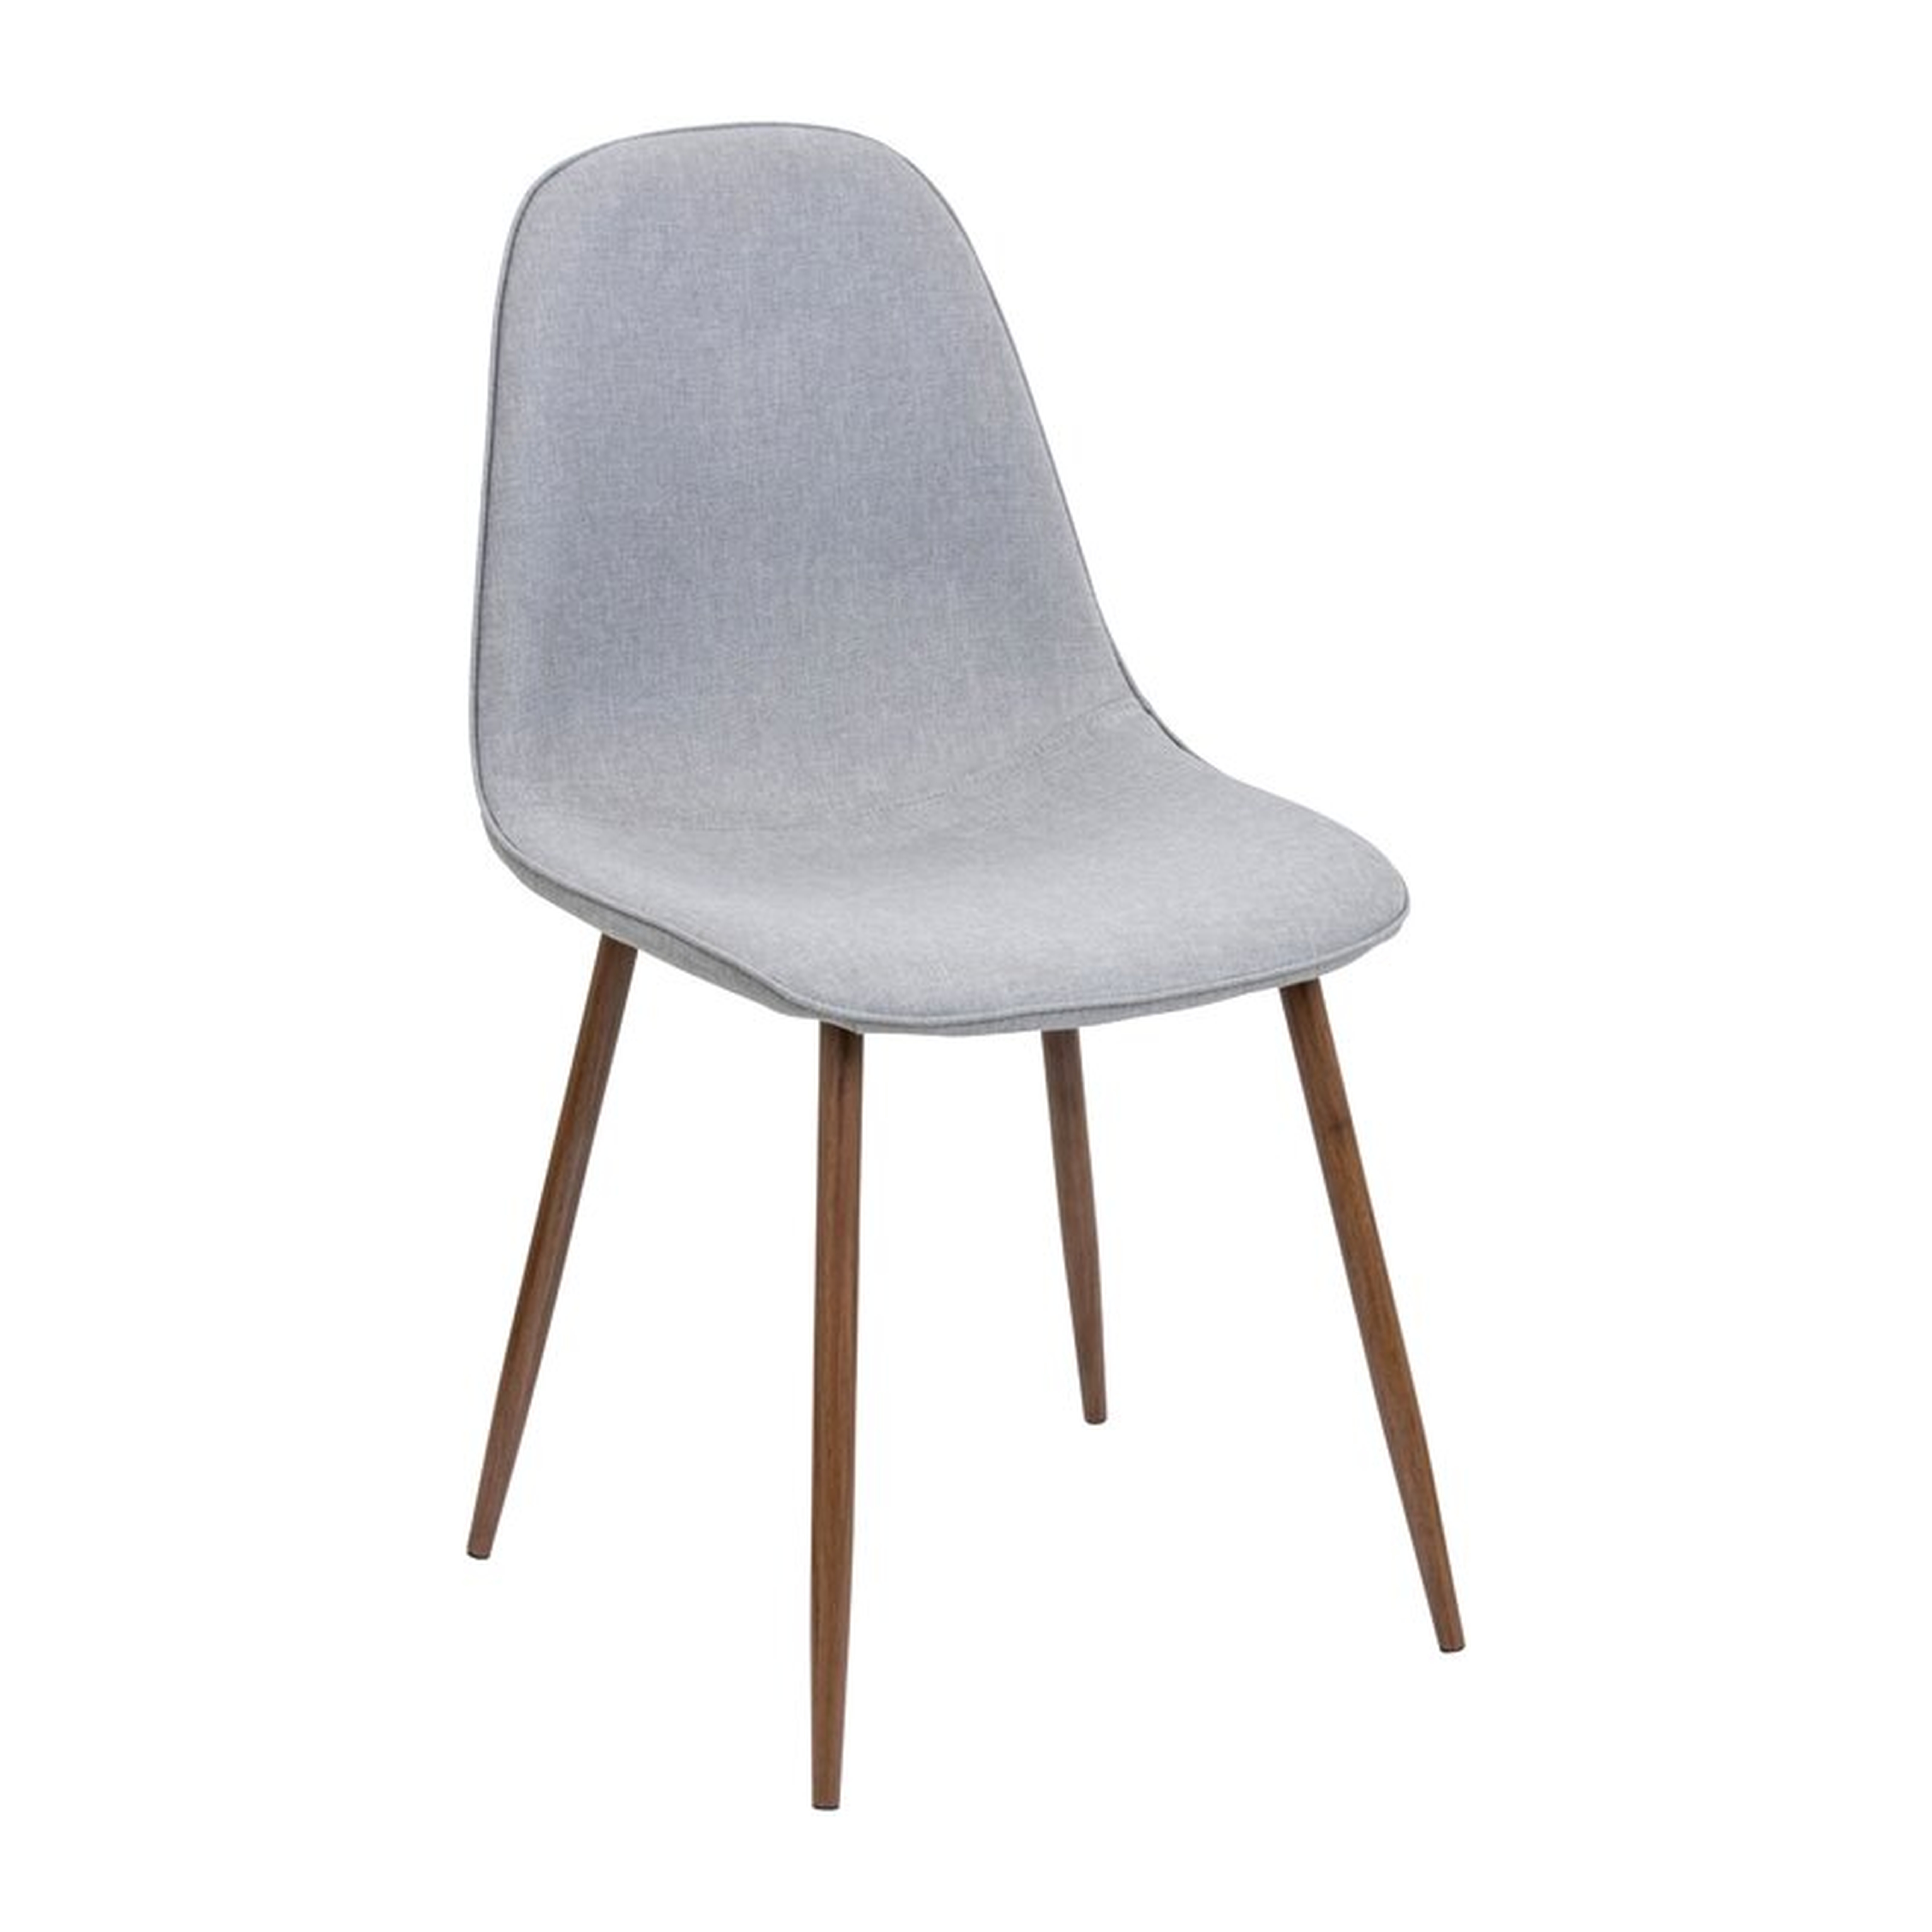 Laurens Mid-Century Modern Upholstered Side Chair (Set of 2) - Wayfair